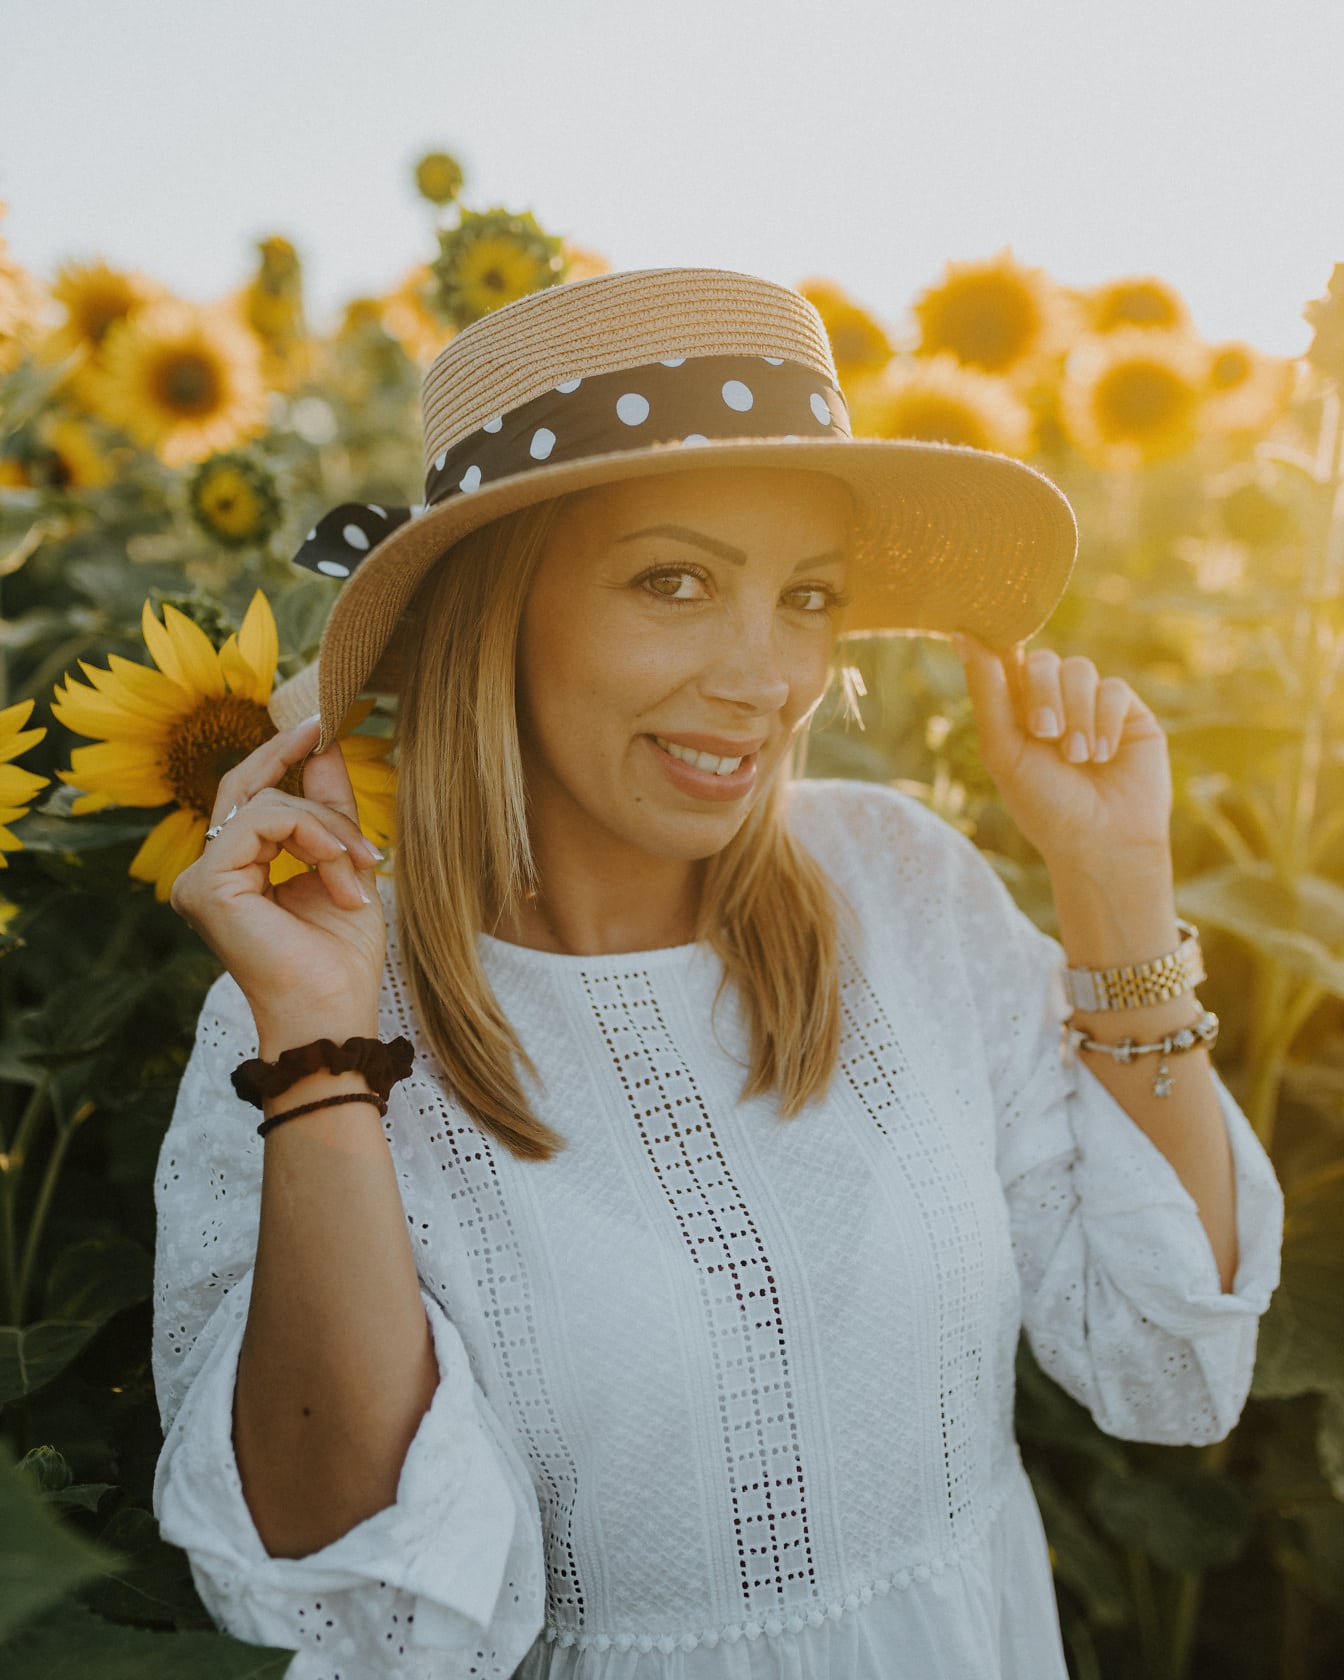 Wanita cantik ceria tersenyum di ladang bunga matahari dengan sinar matahari